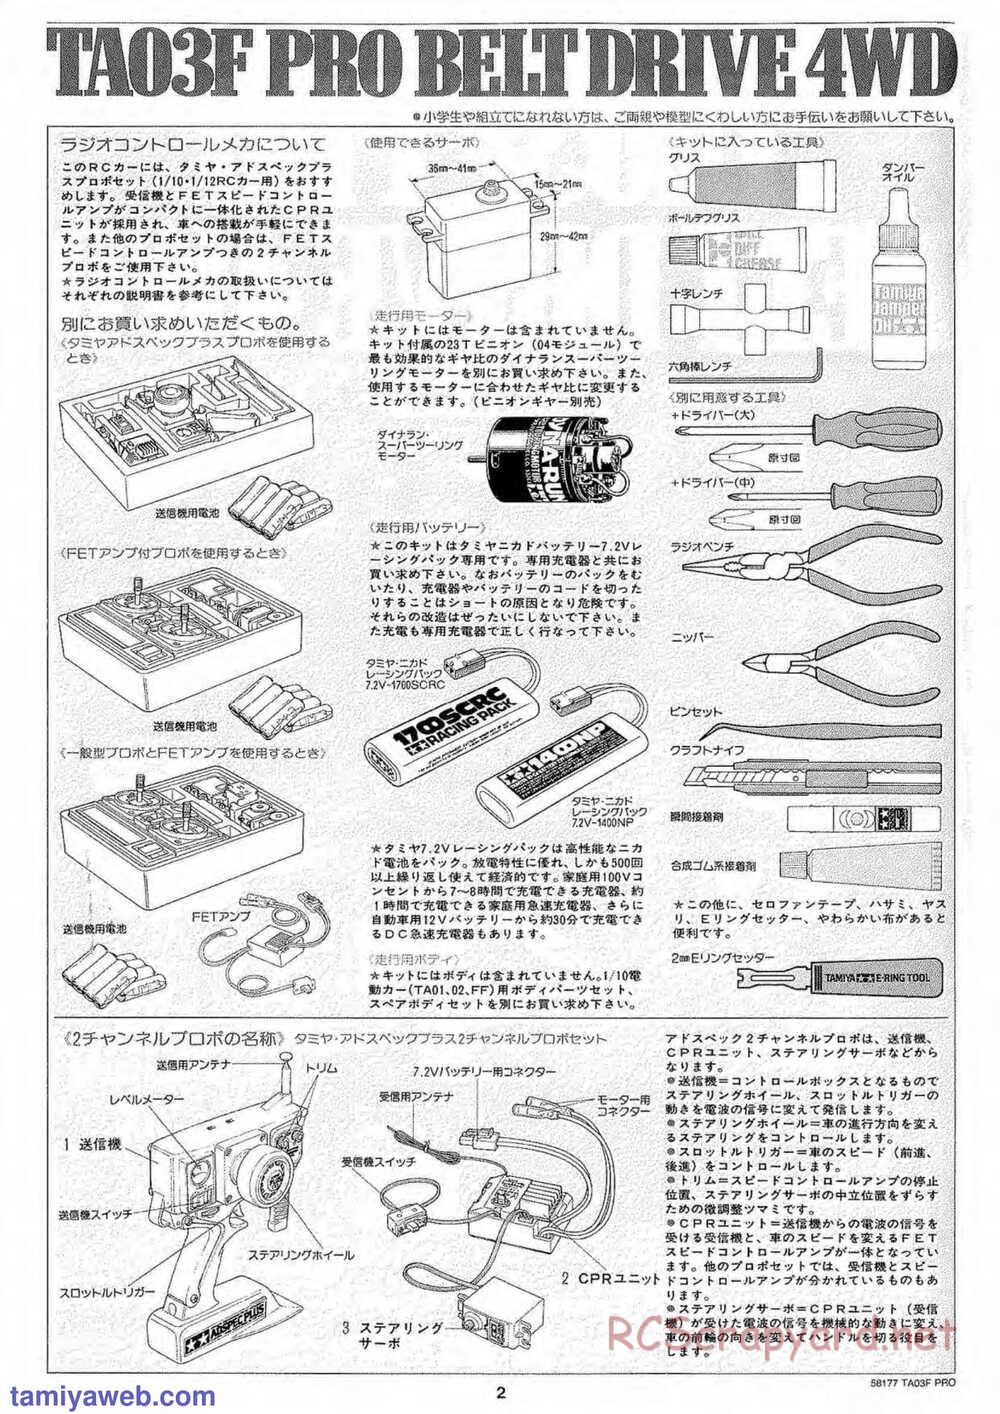 Tamiya - TA-03F Pro Chassis - Manual - Page 2